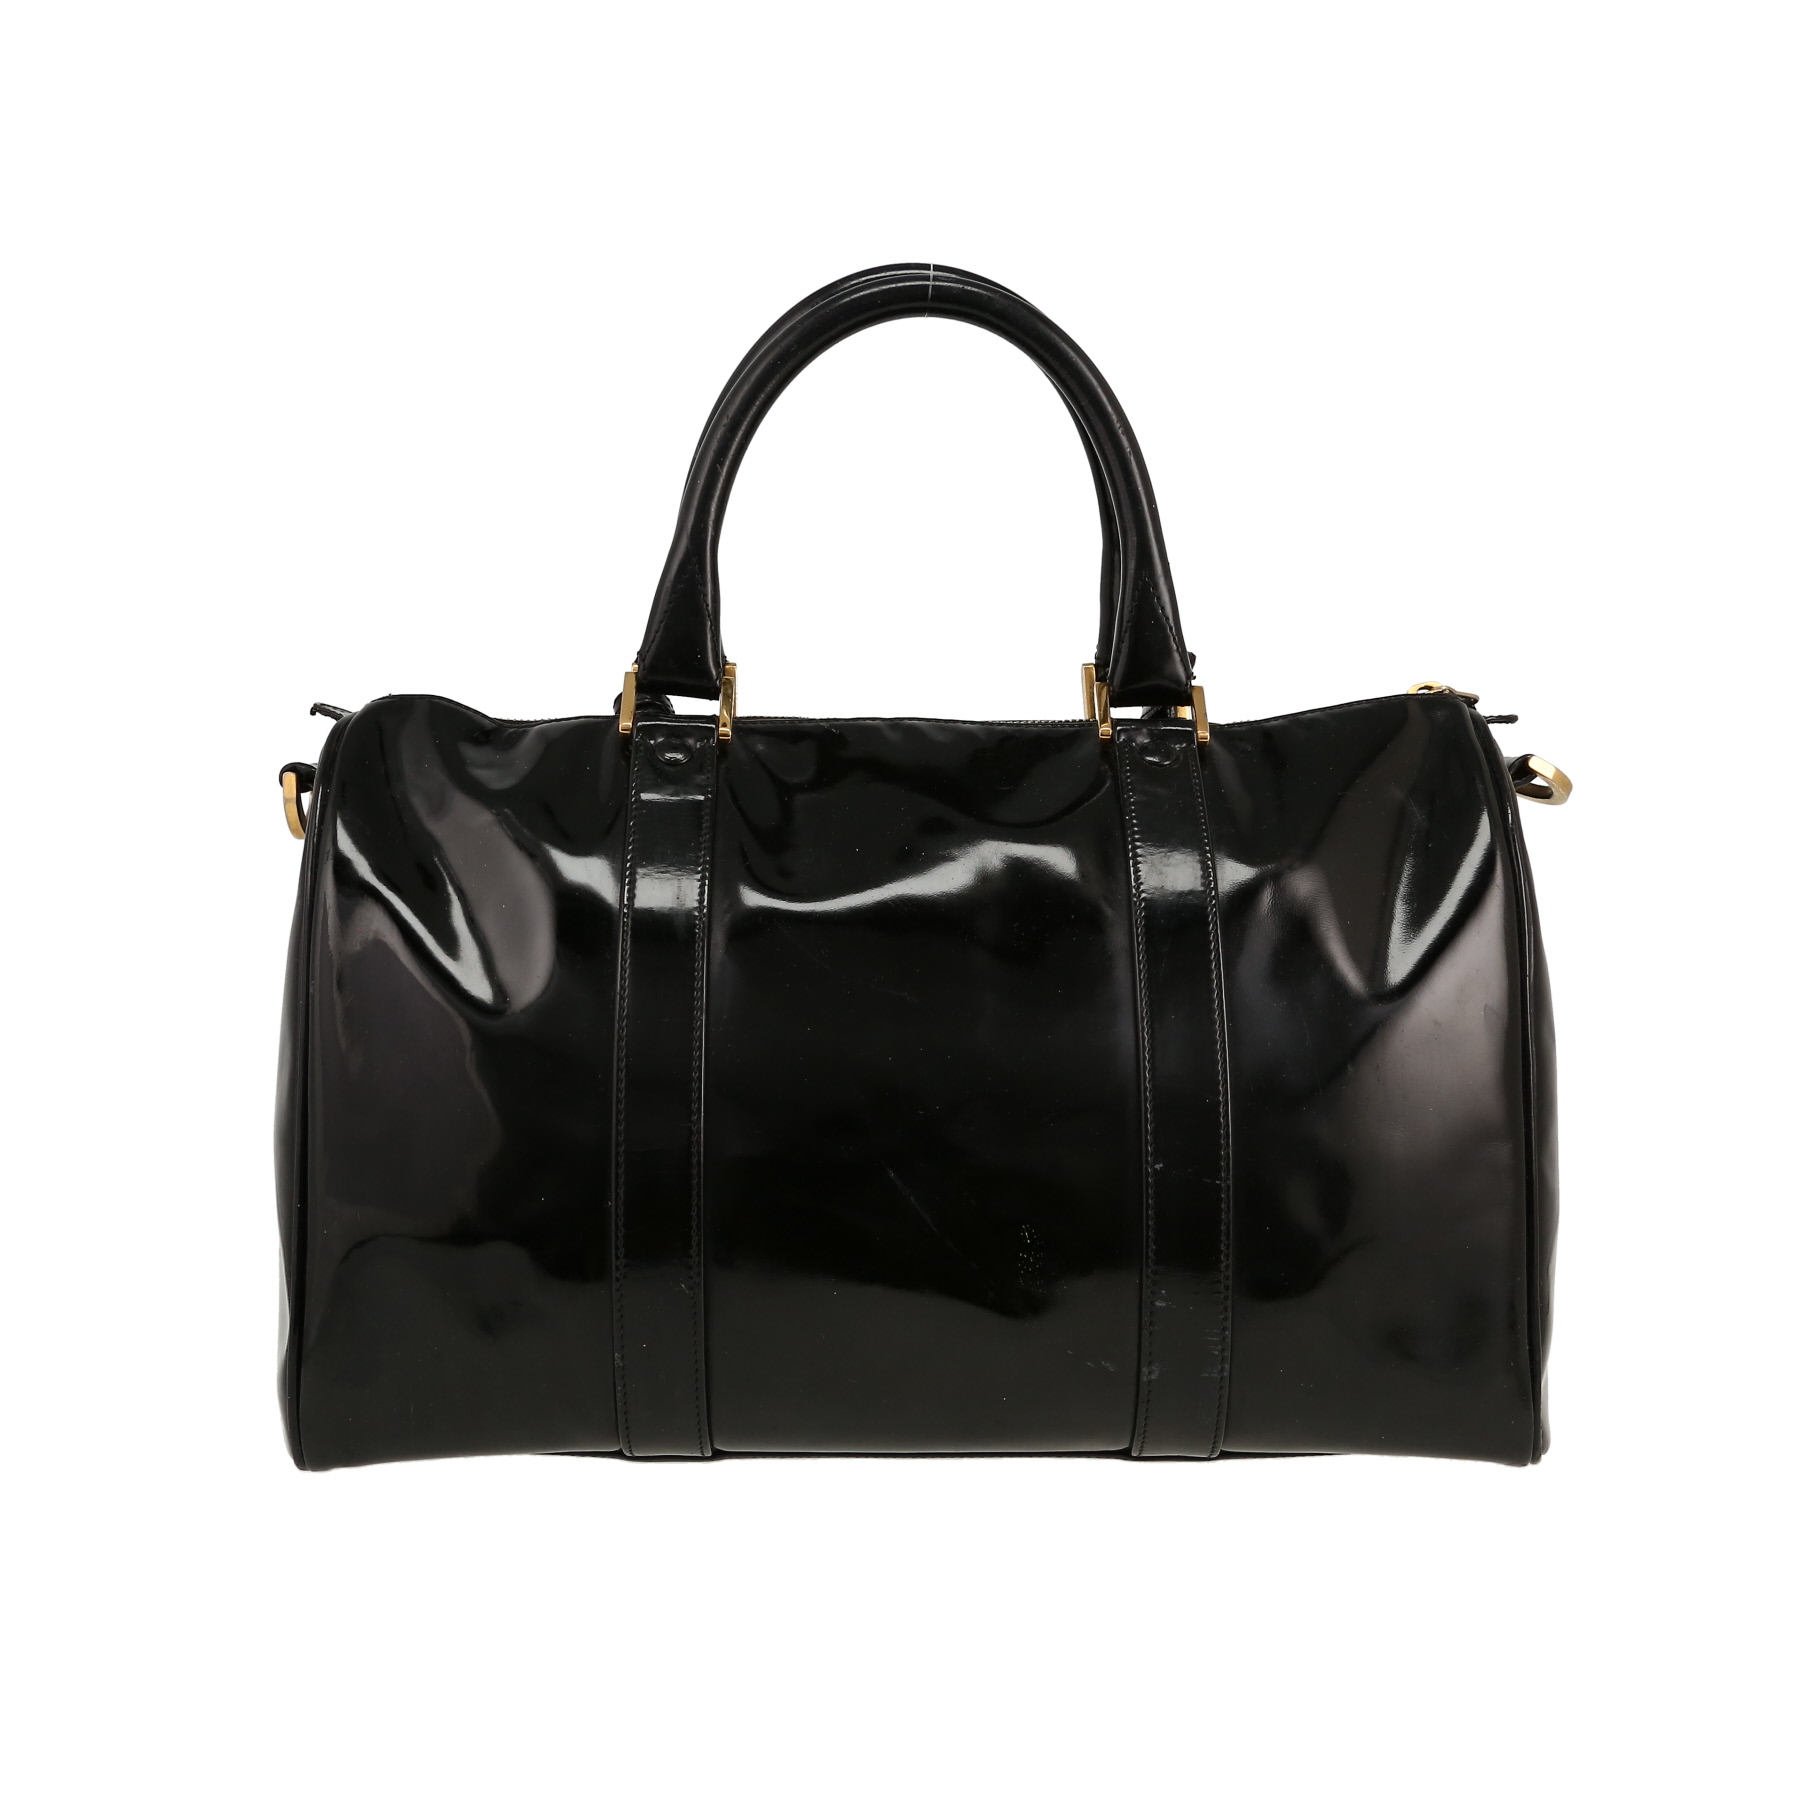 Handbag In Black Patent Leather